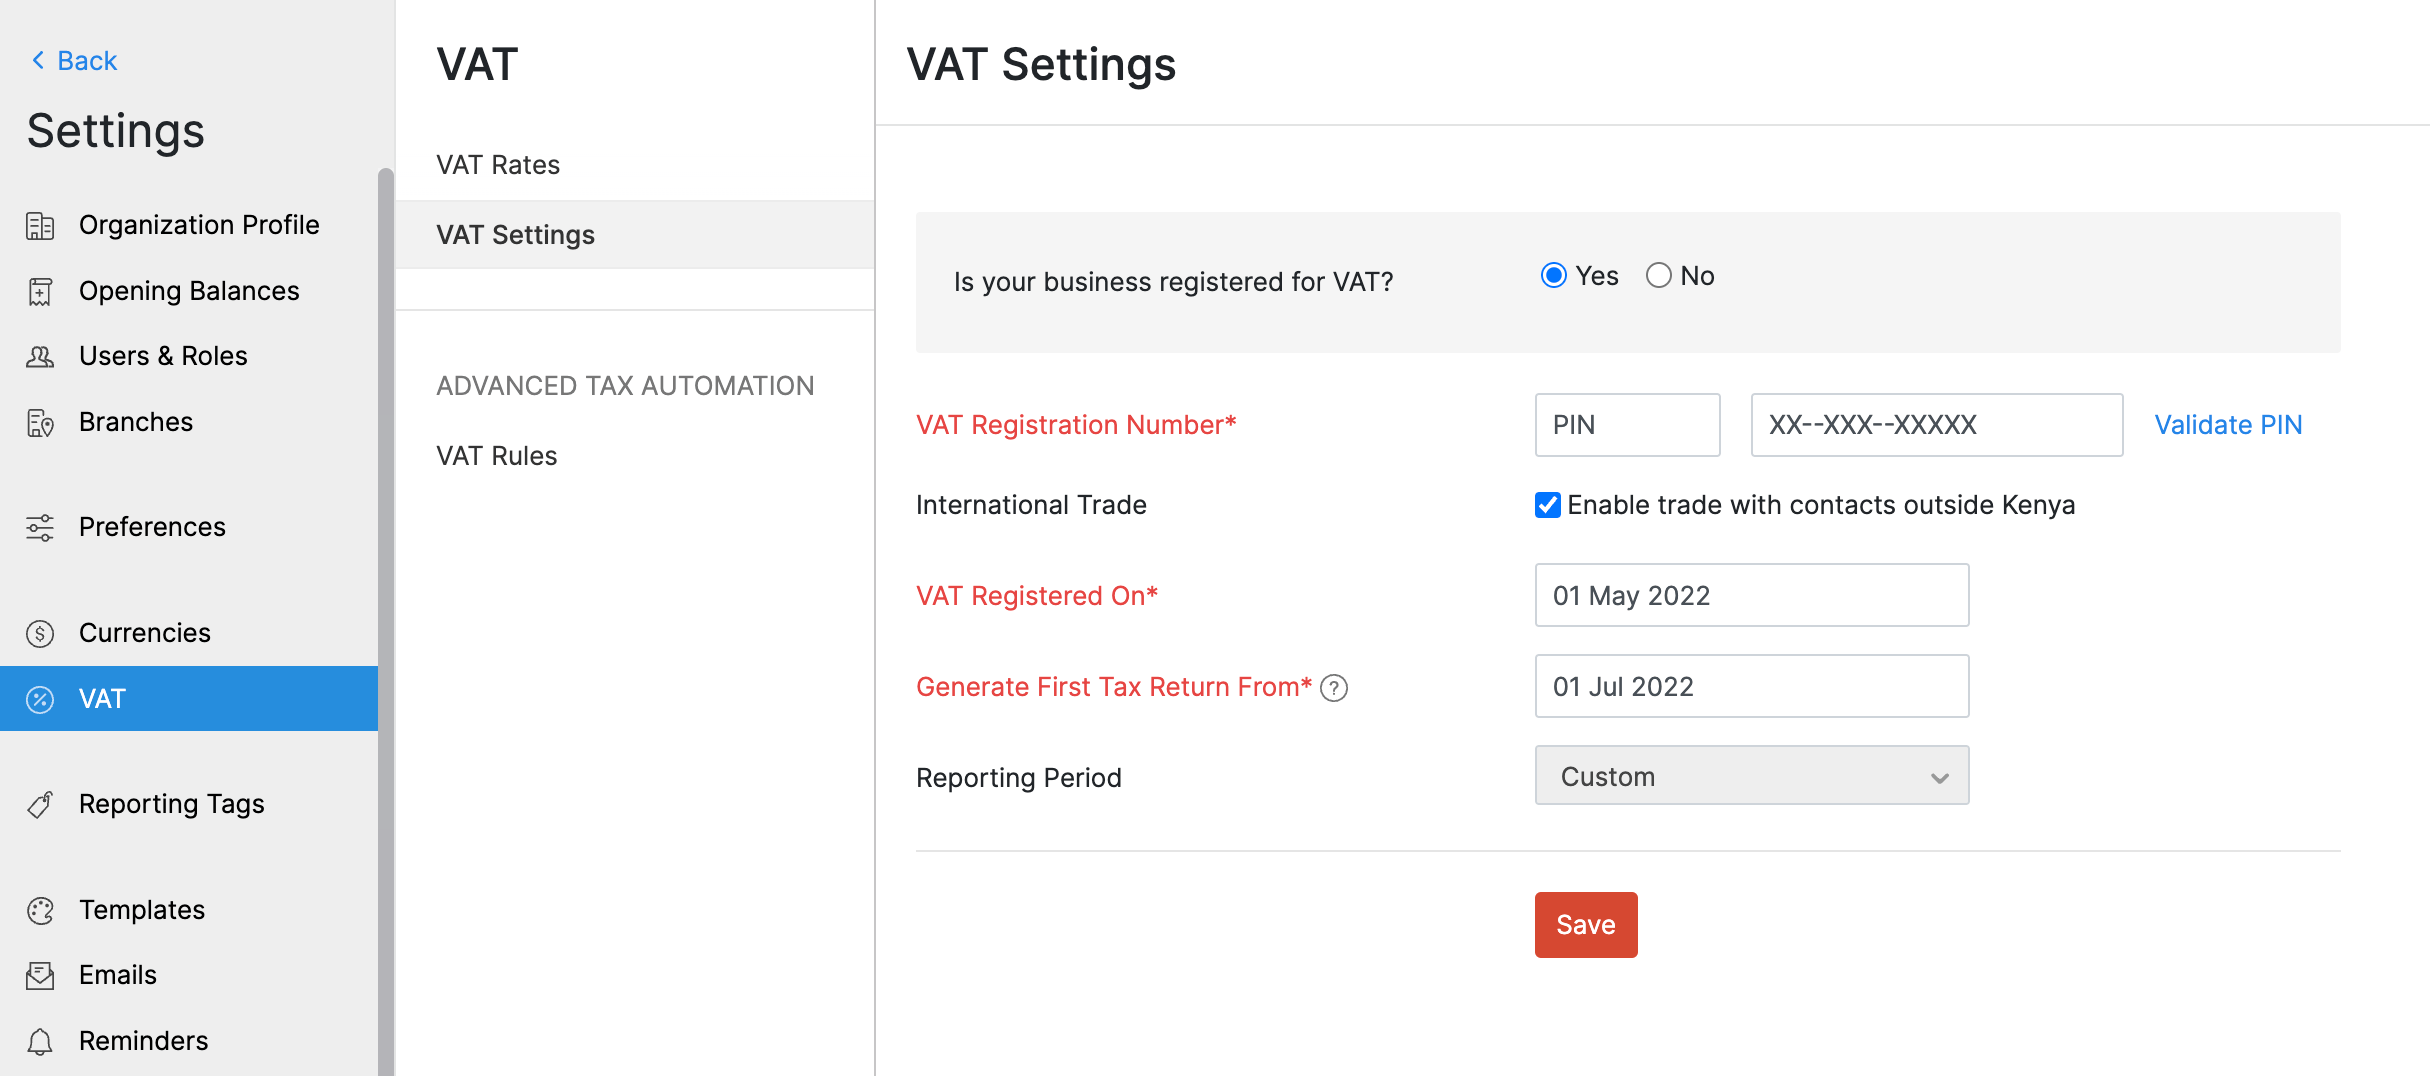 VAT Settings